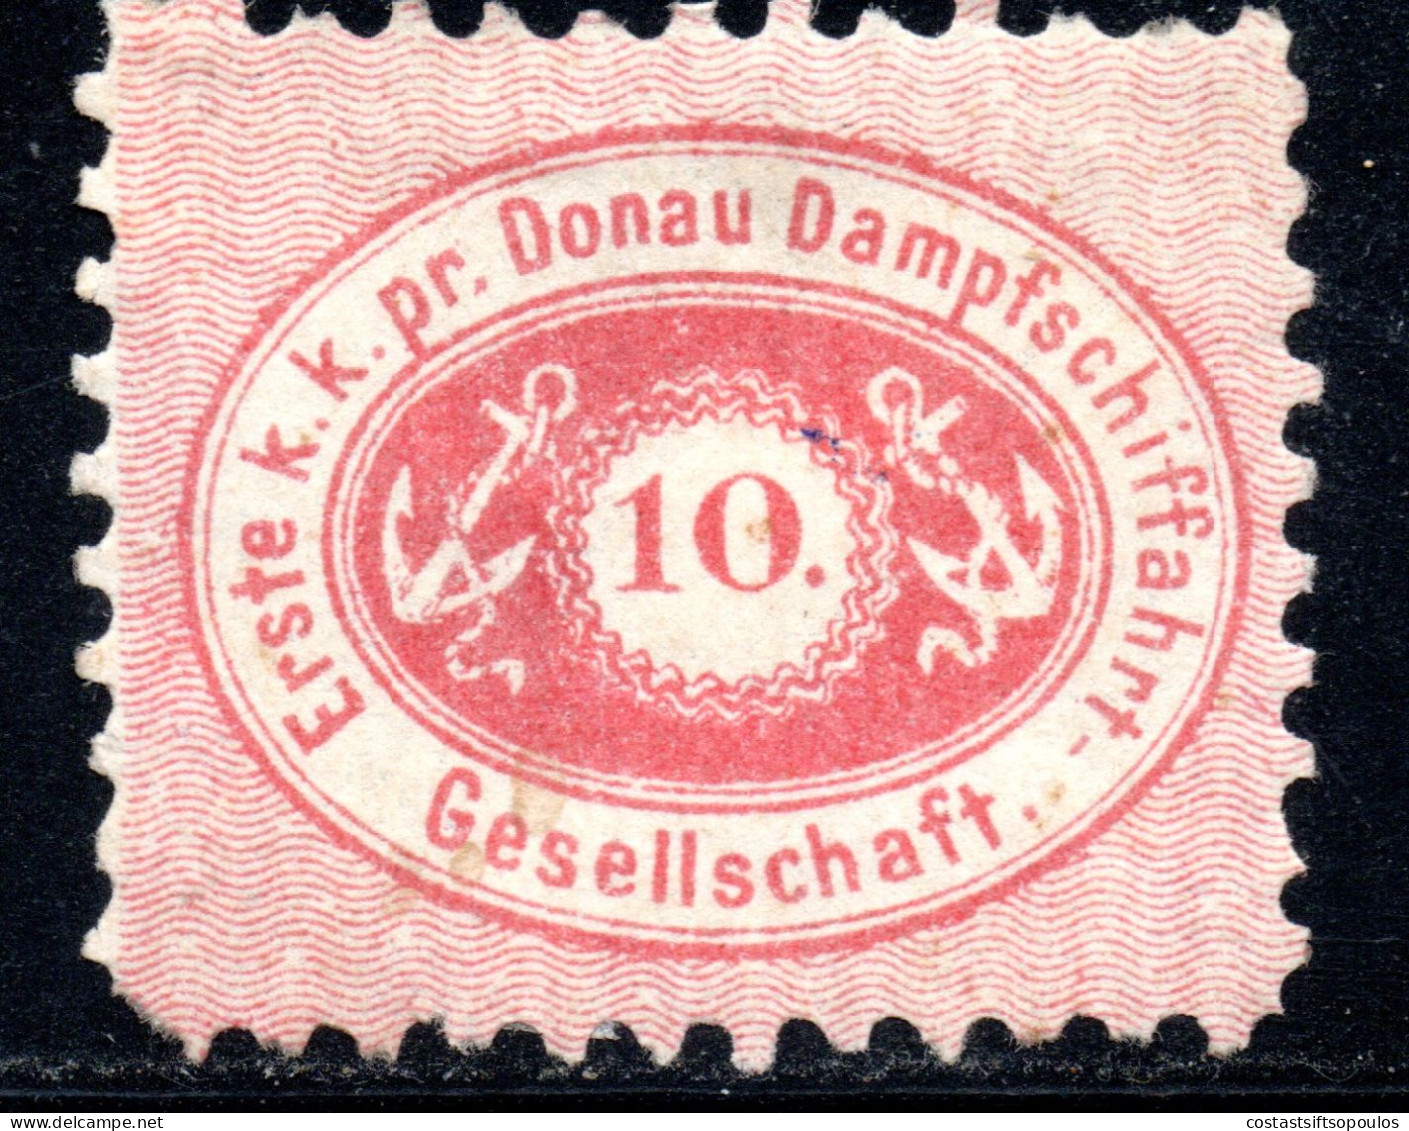 2462. AUSTRIA 1870 DDSG 10 KR. #4 PART GUM. SIGNED - Donau Dampfschiffahrts Gesellschaft (DDSG)